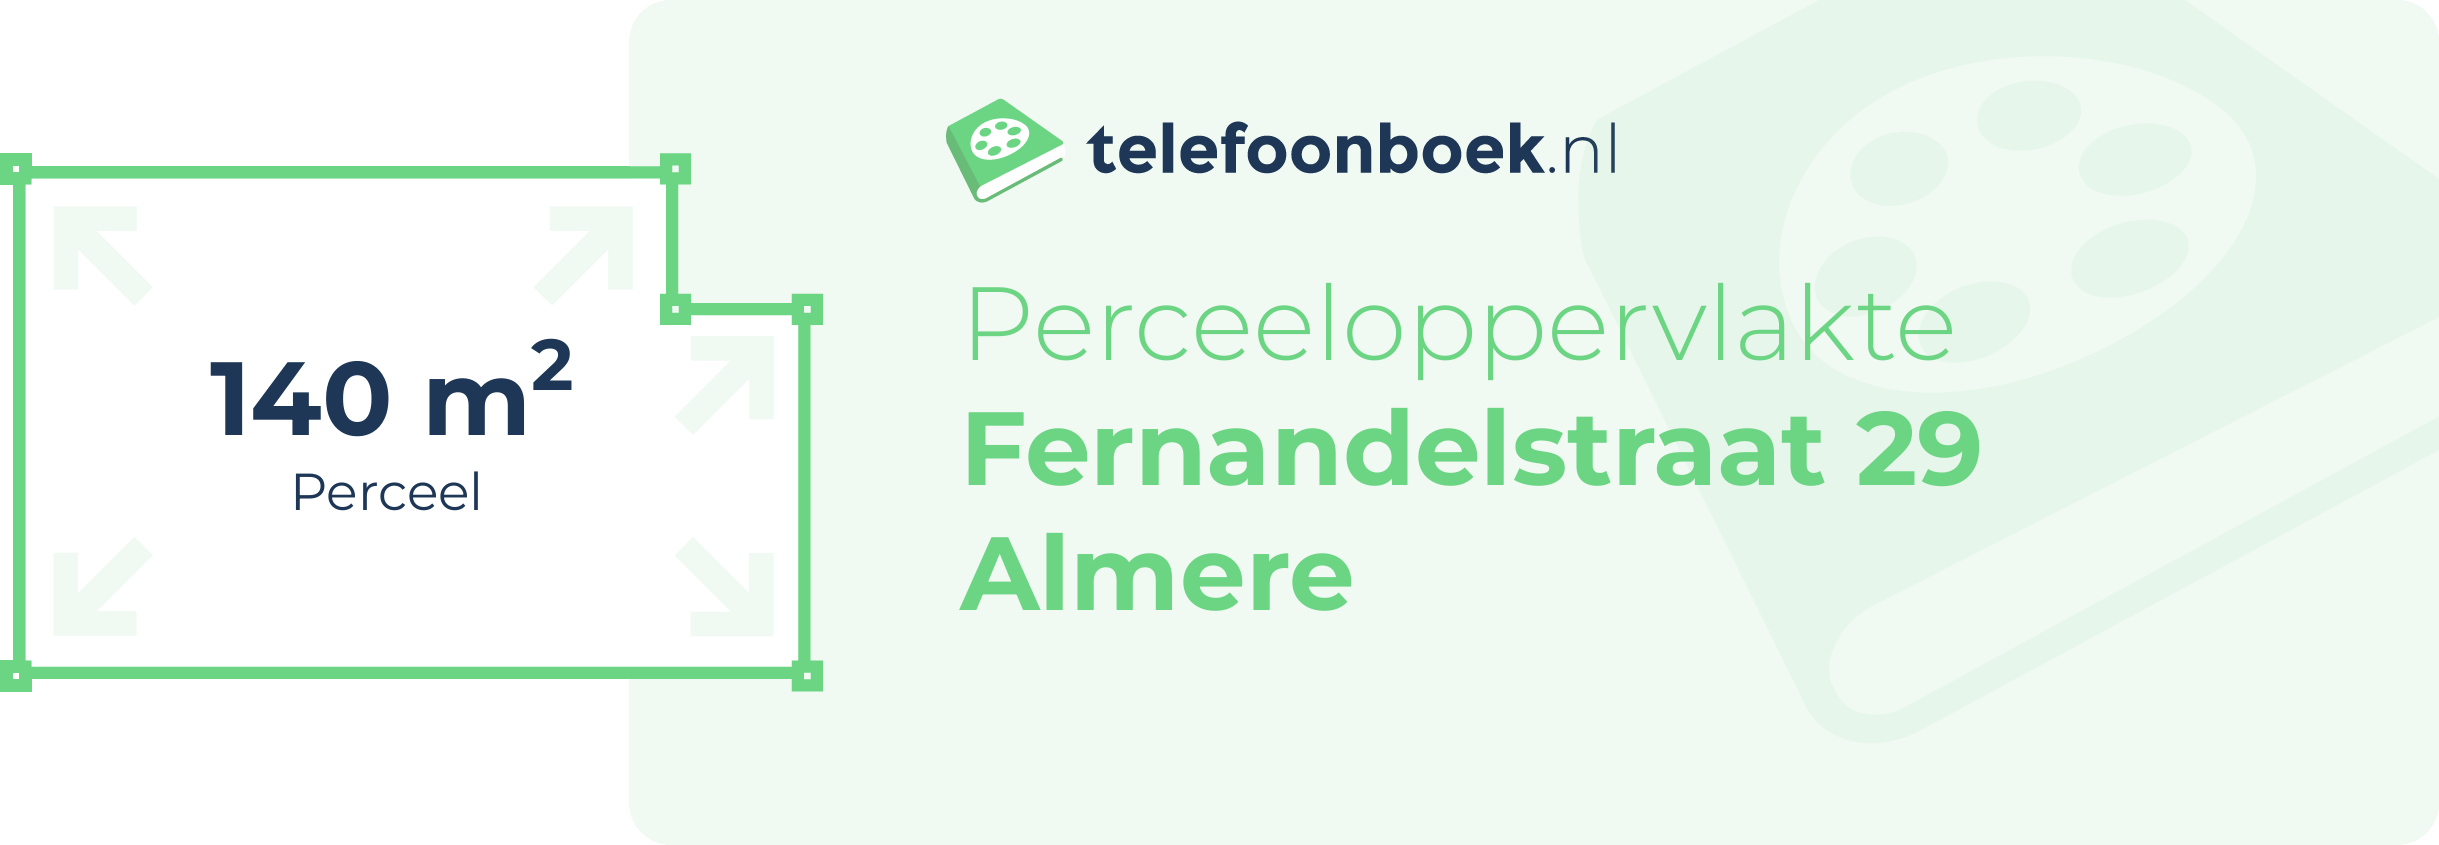 Perceeloppervlakte Fernandelstraat 29 Almere